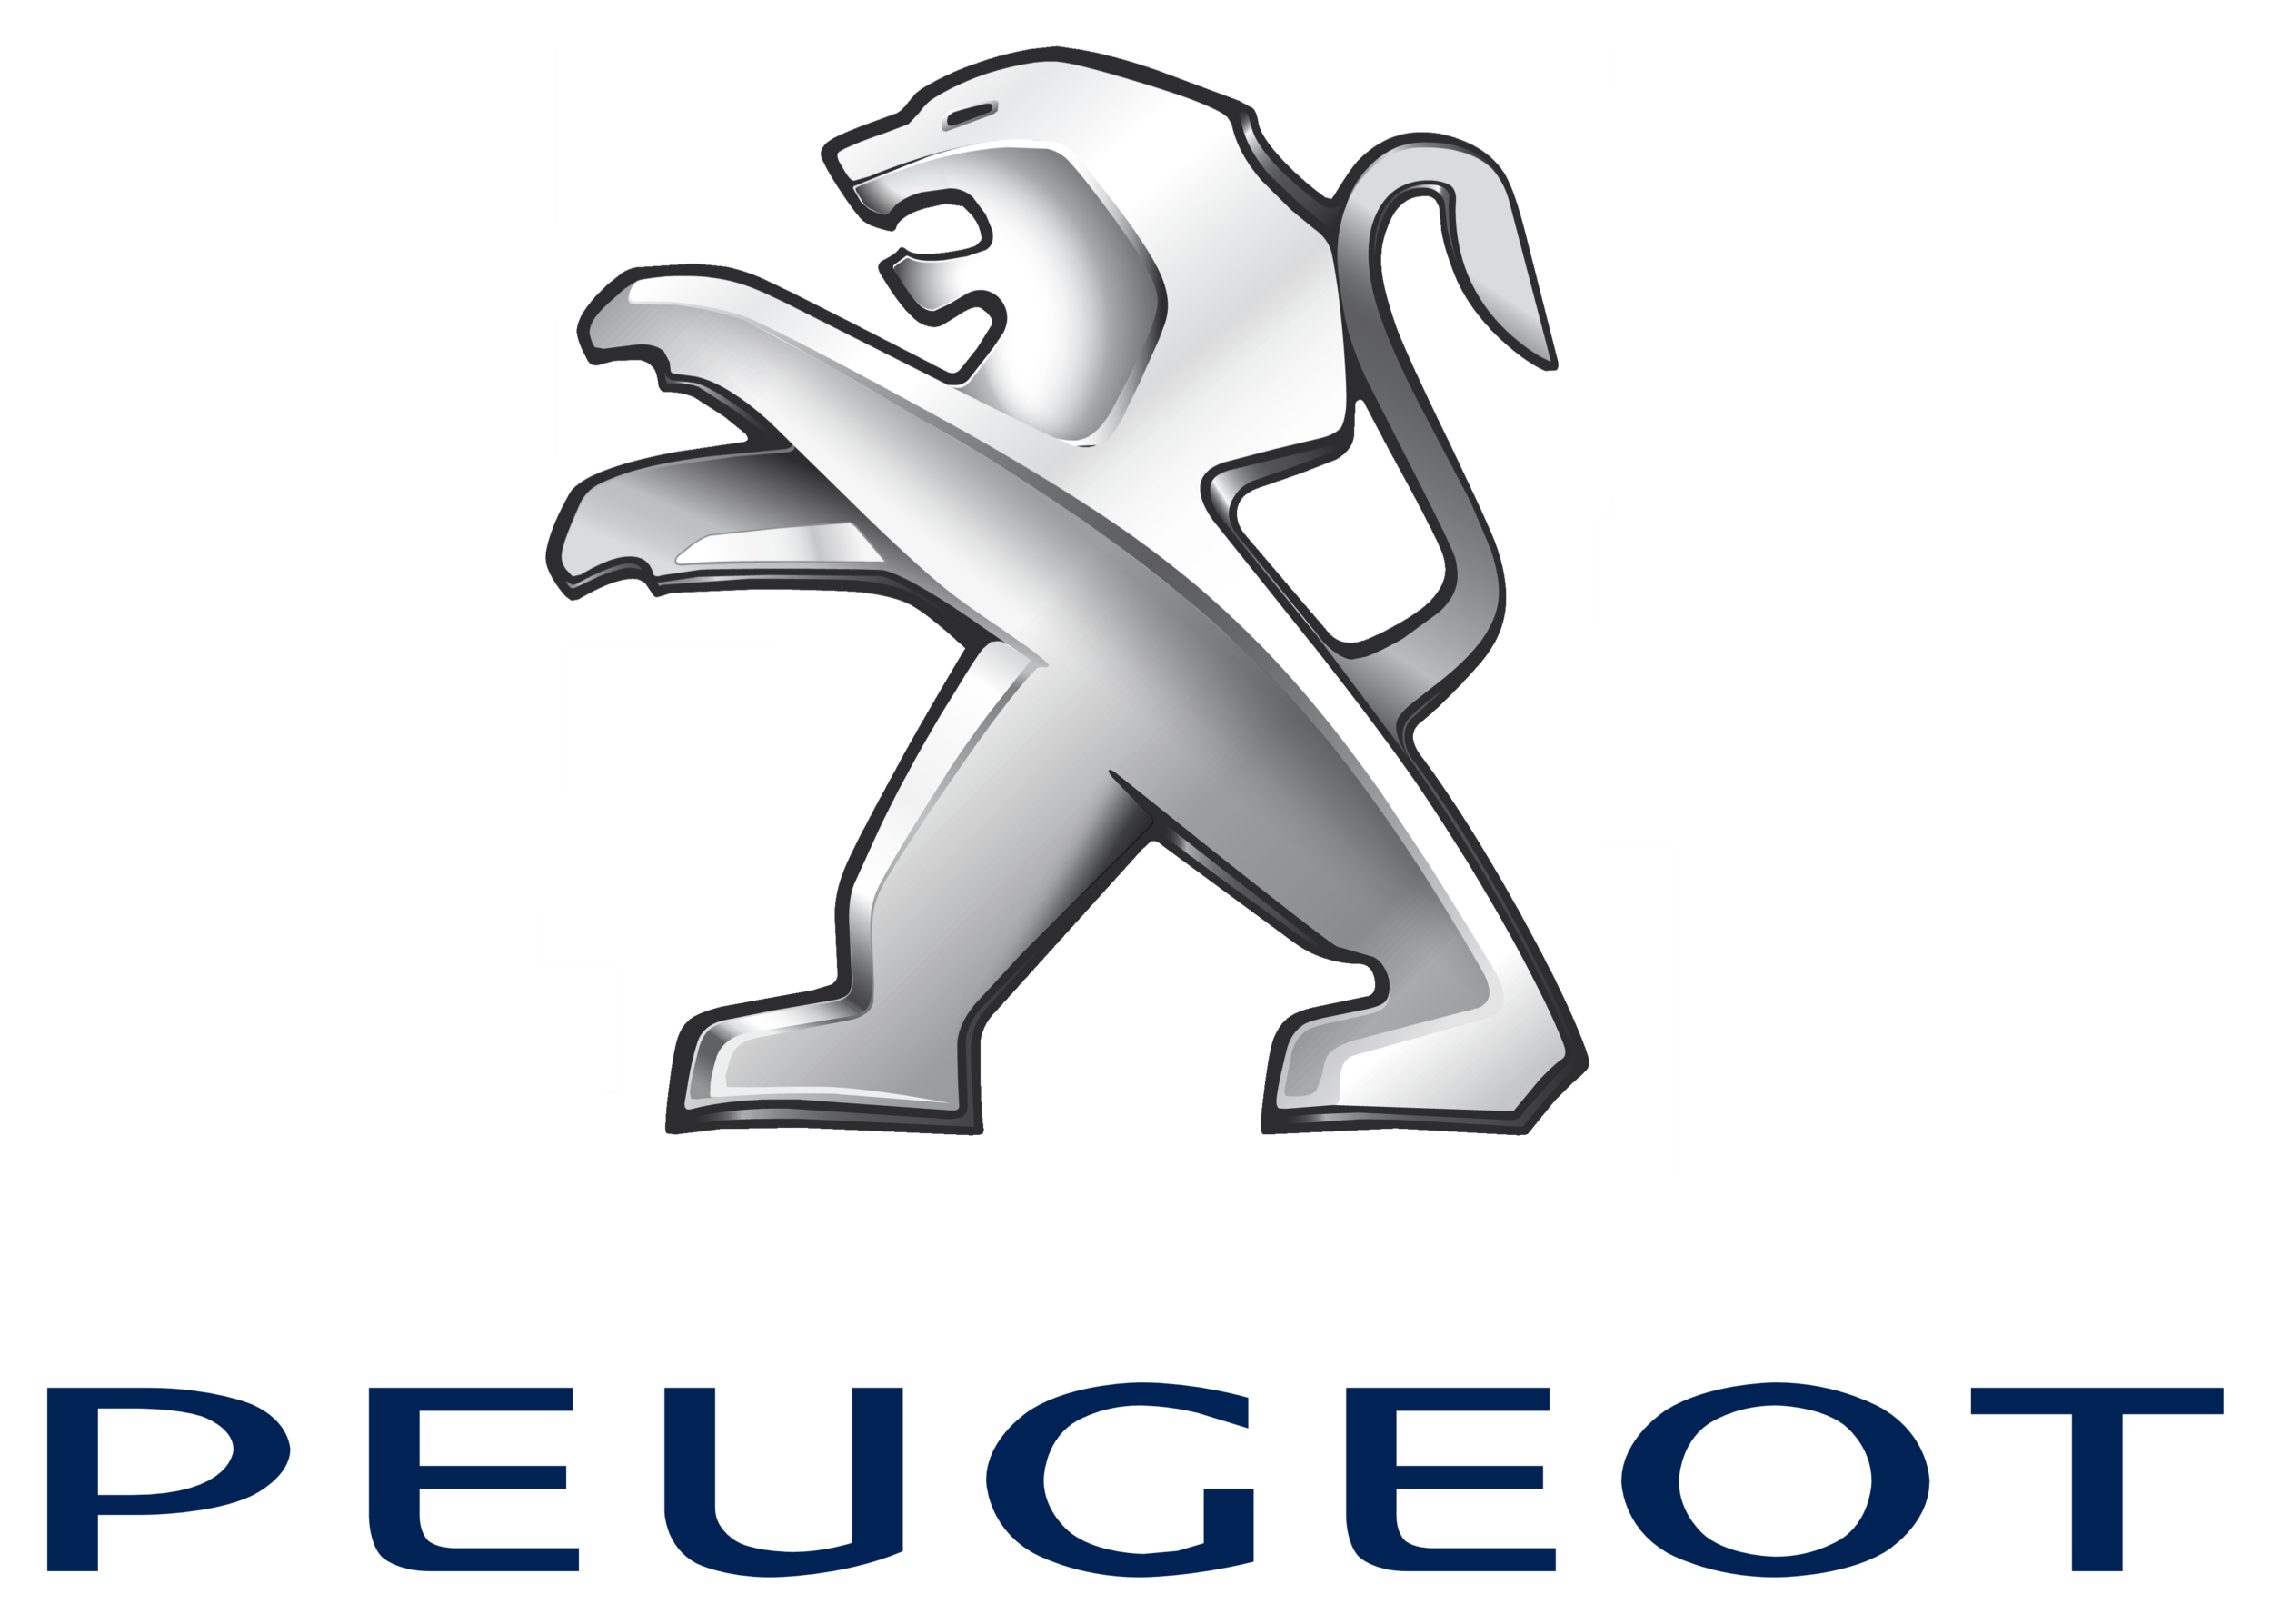 Peugeot-logo.png